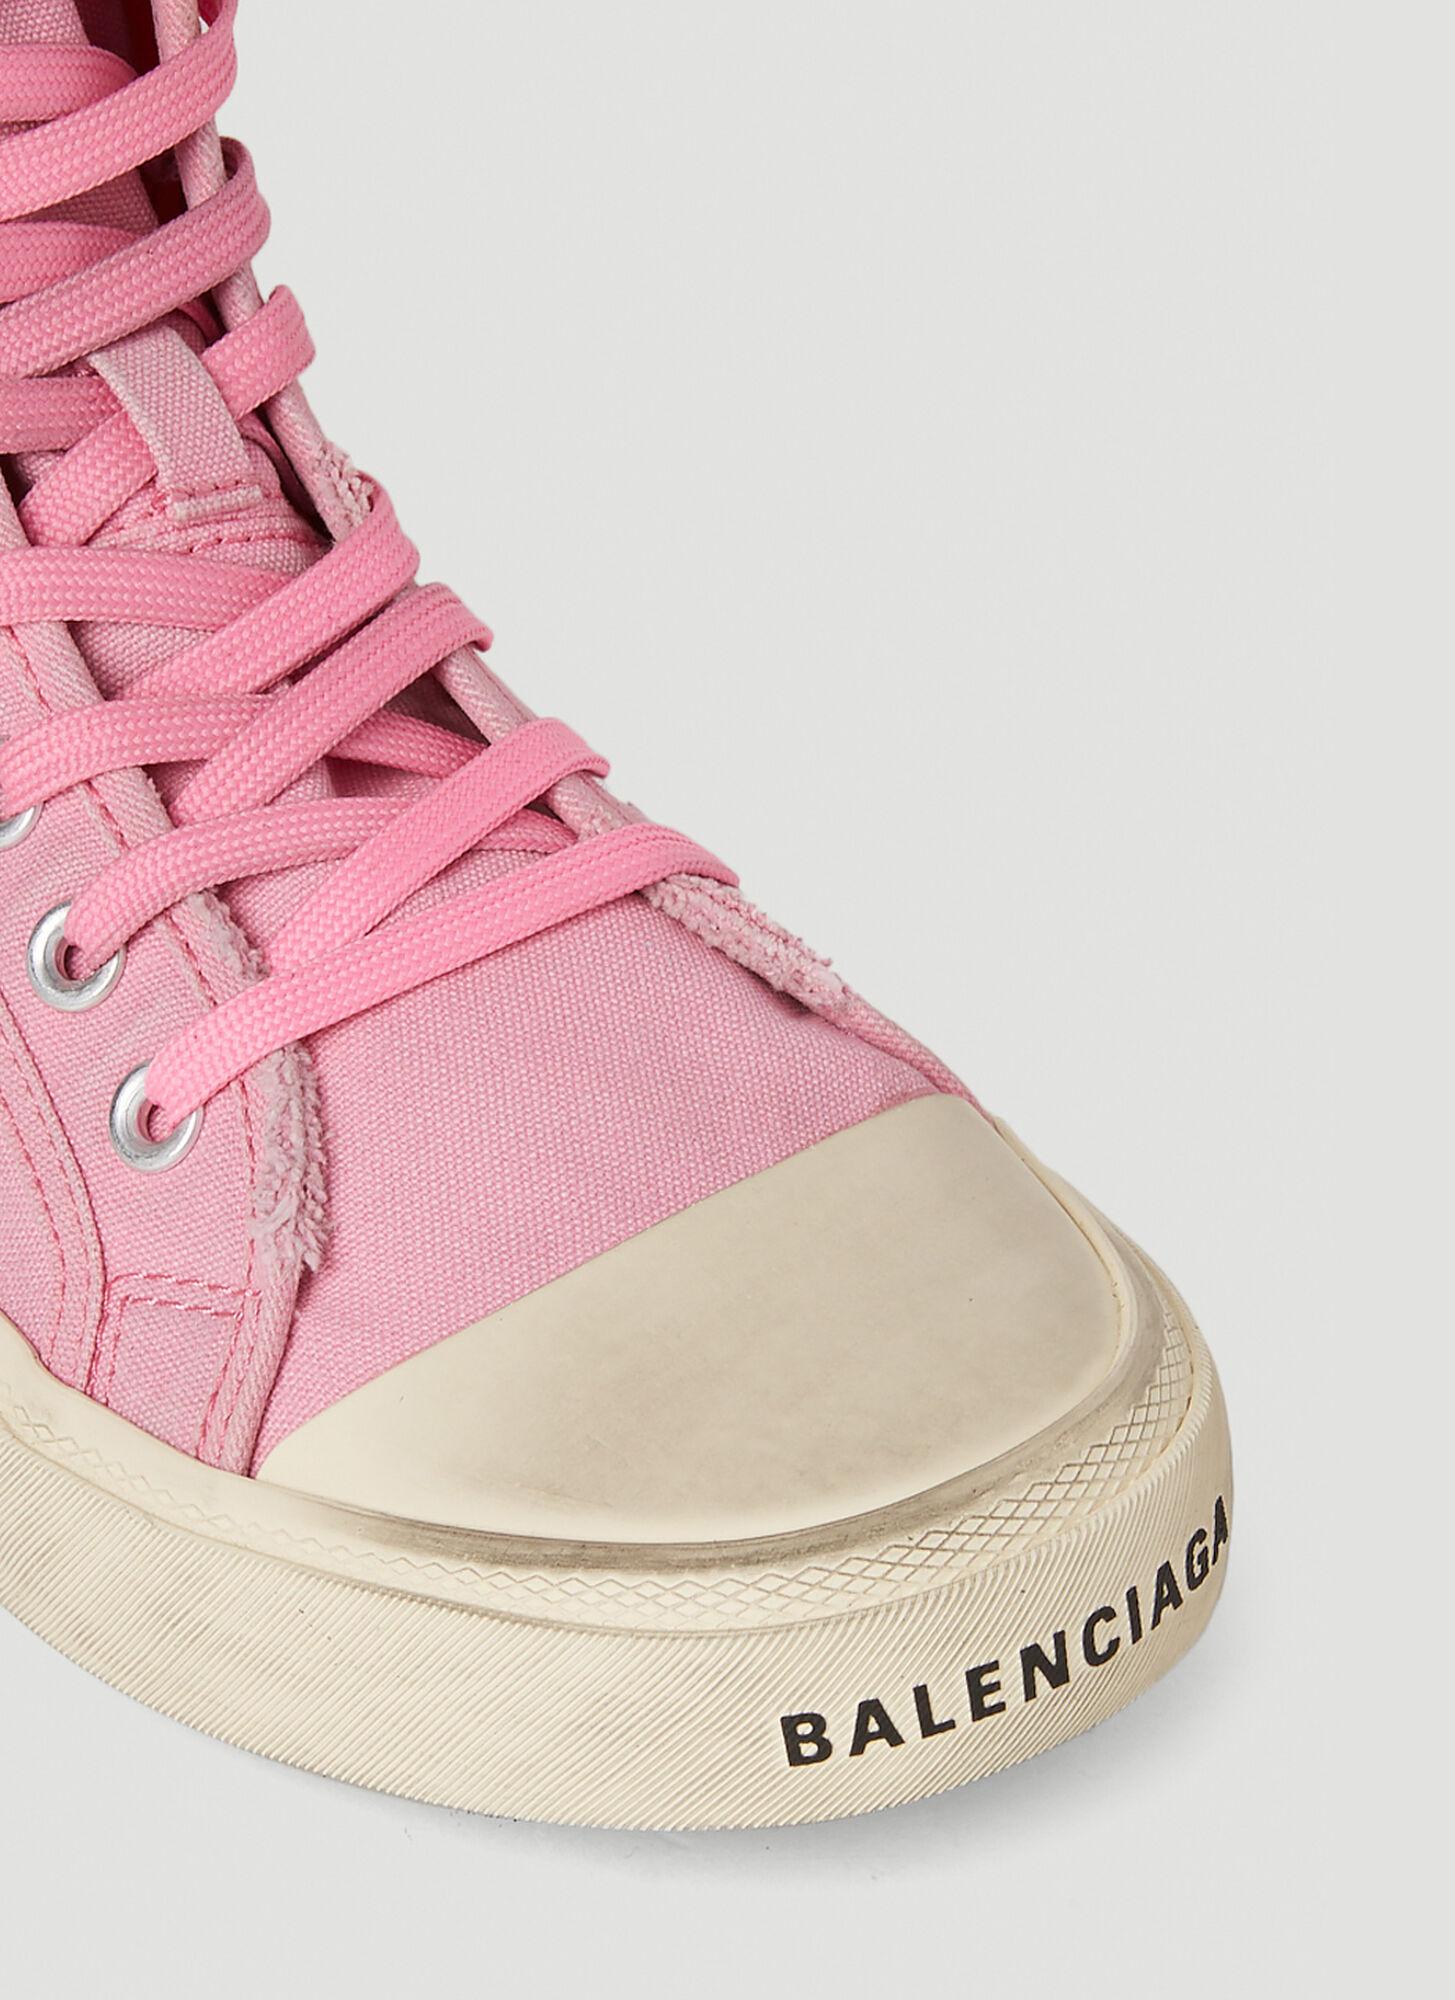 Balenciaga Paris High Top Sneakers in Pink | Lyst